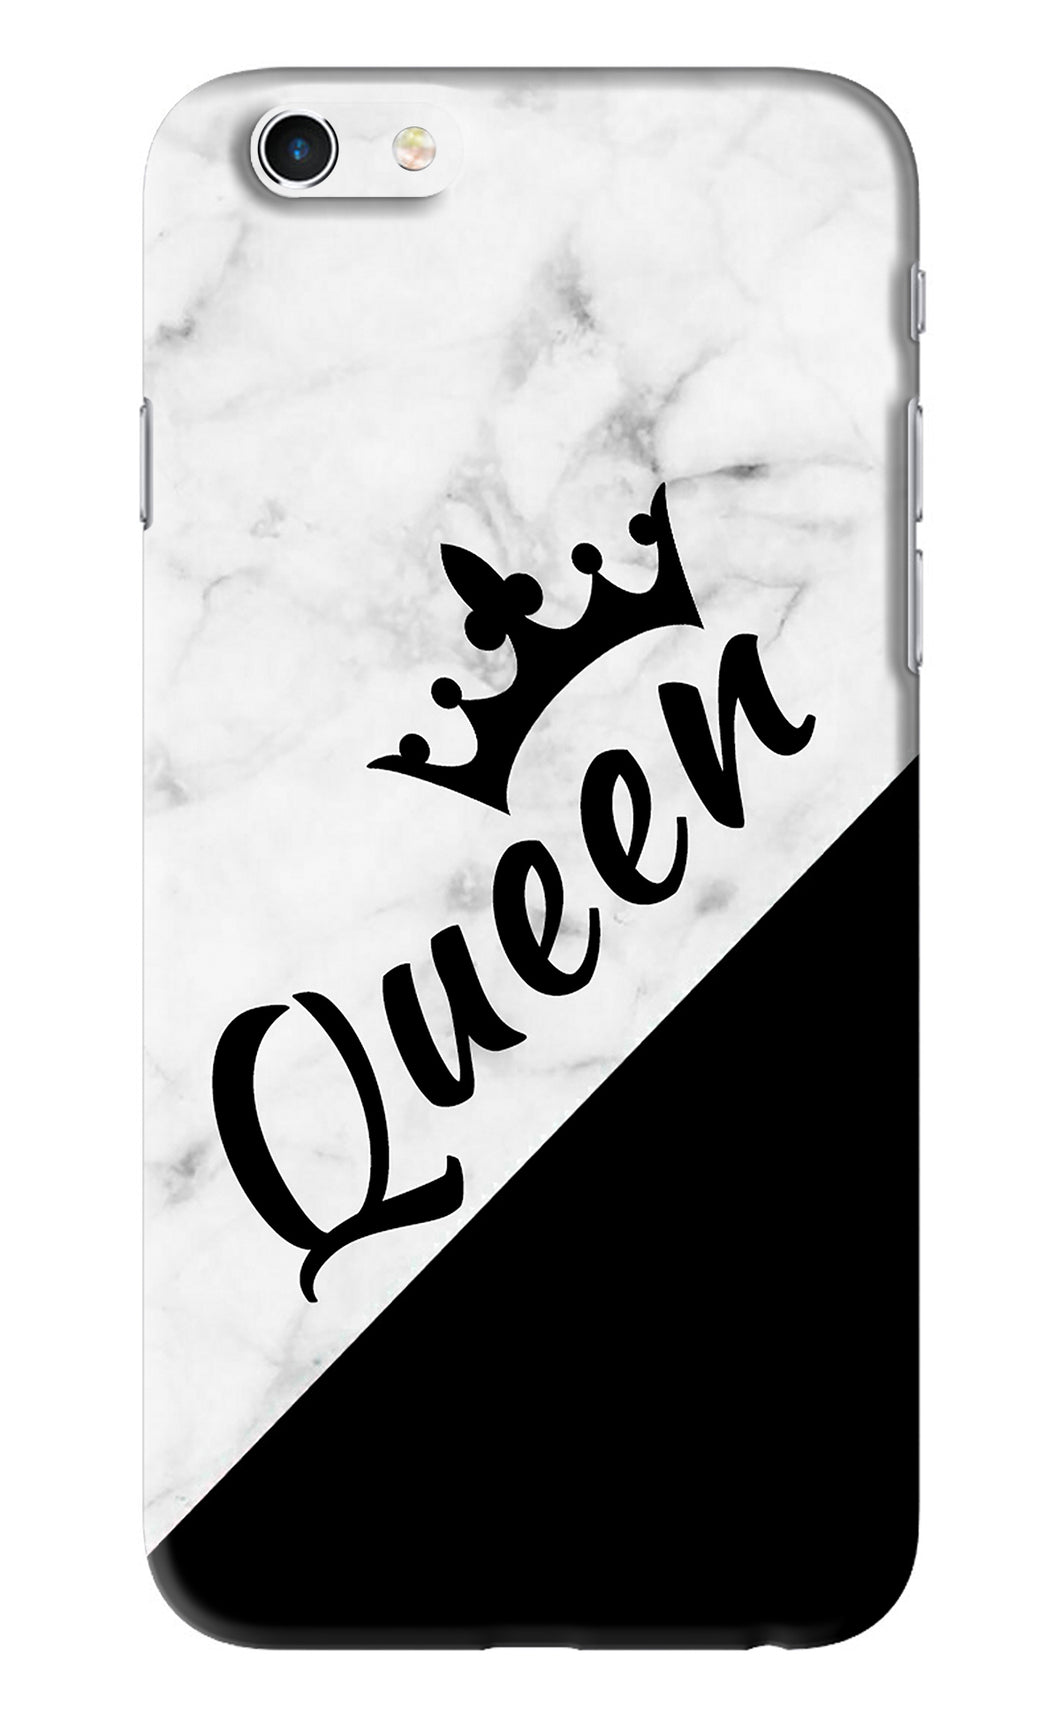 Queen iPhone 6 Back Skin Wrap